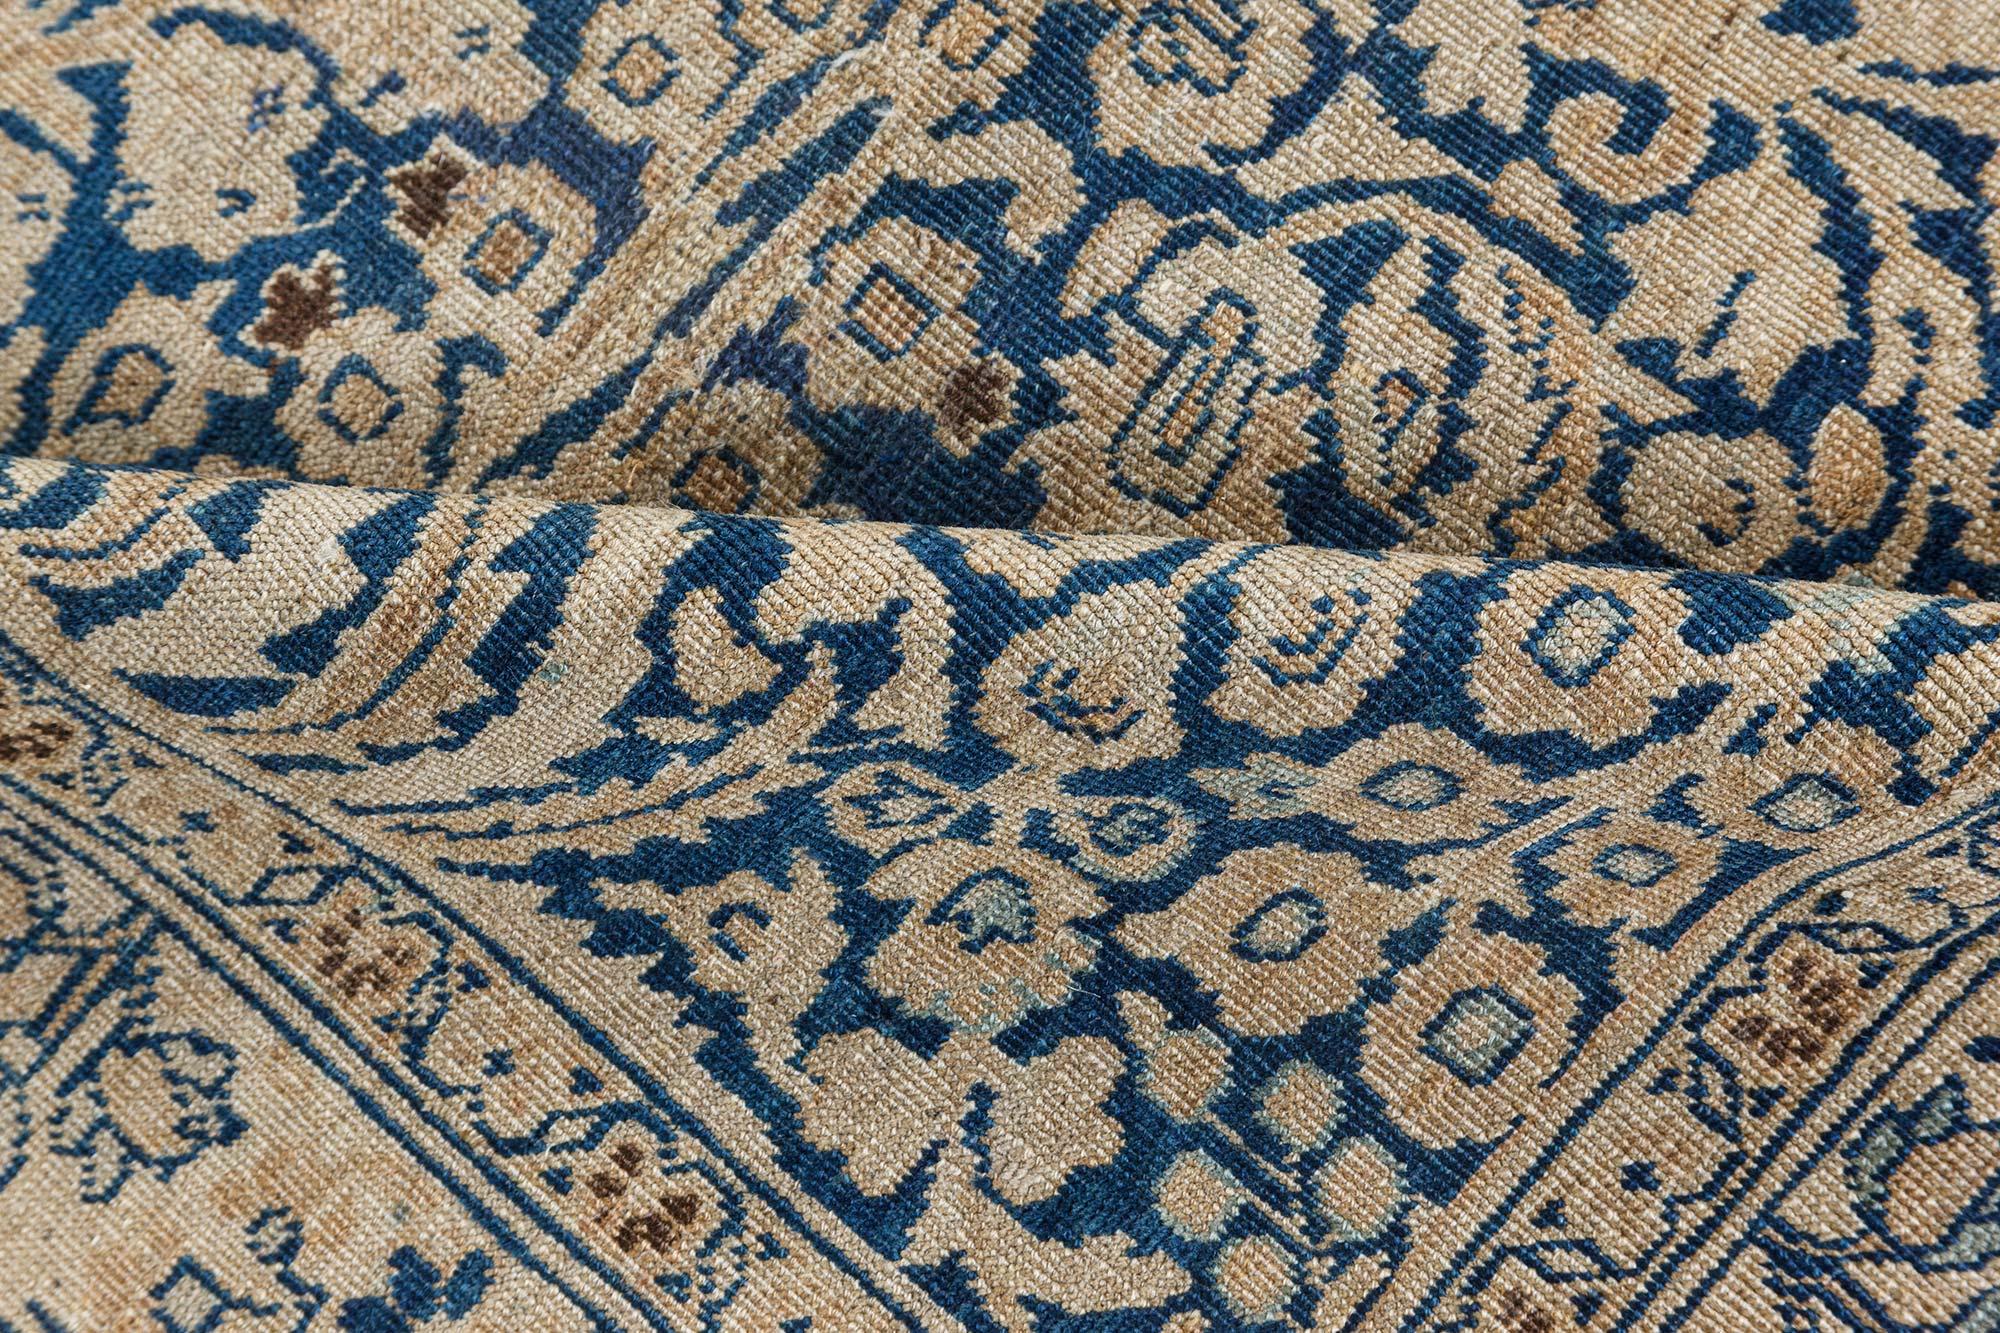 Authentic 19th century Persian Khorassan handmade wool rug
Size: 13'8